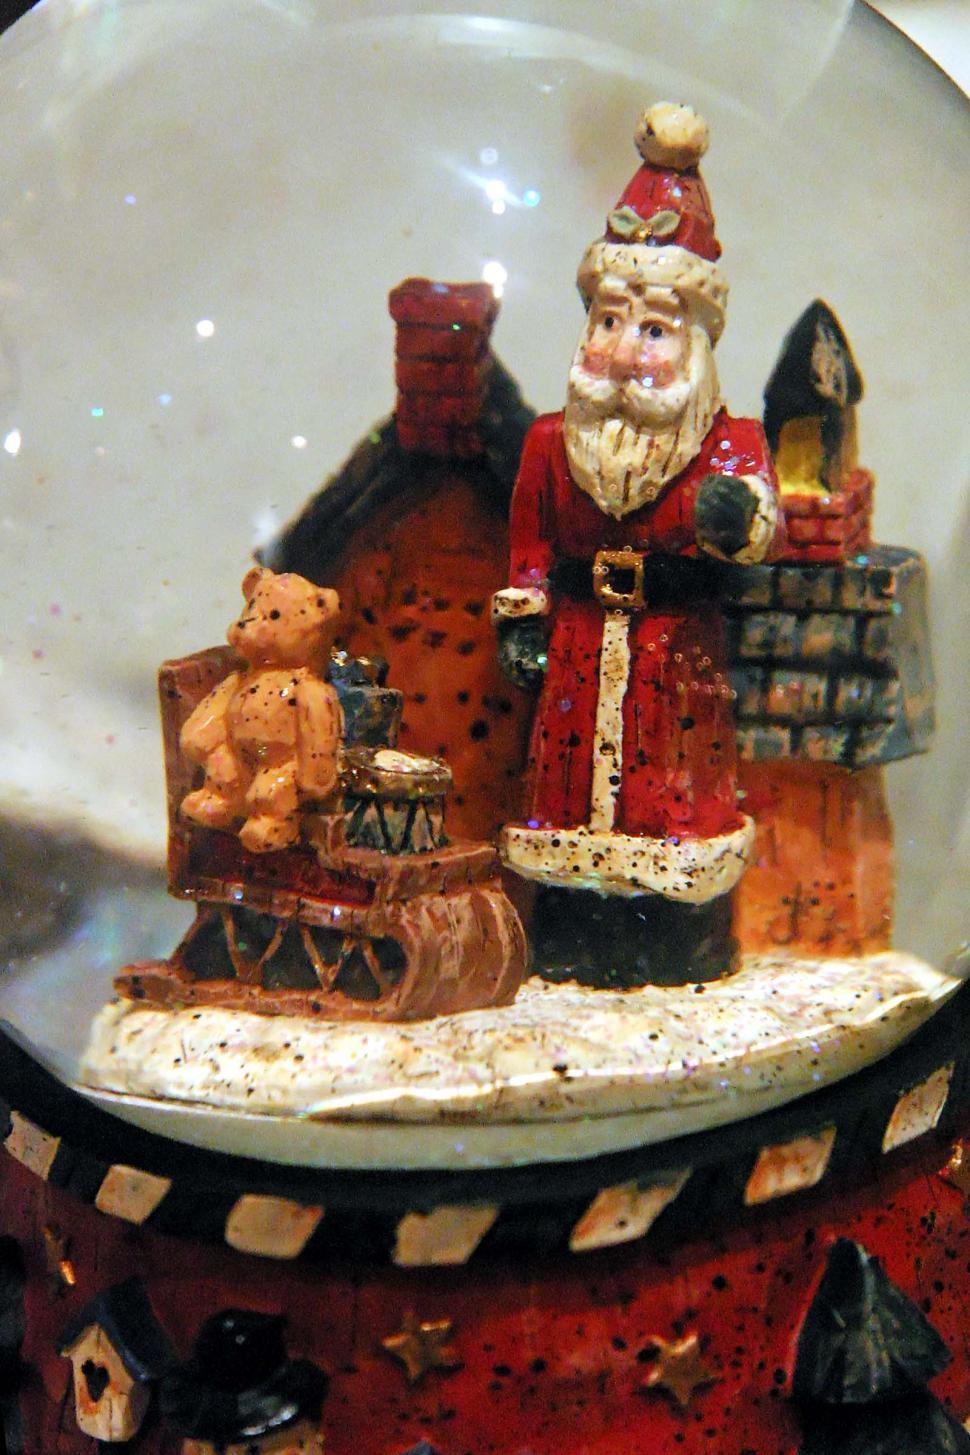 Free Image of Snow Globe With Santa Claus 